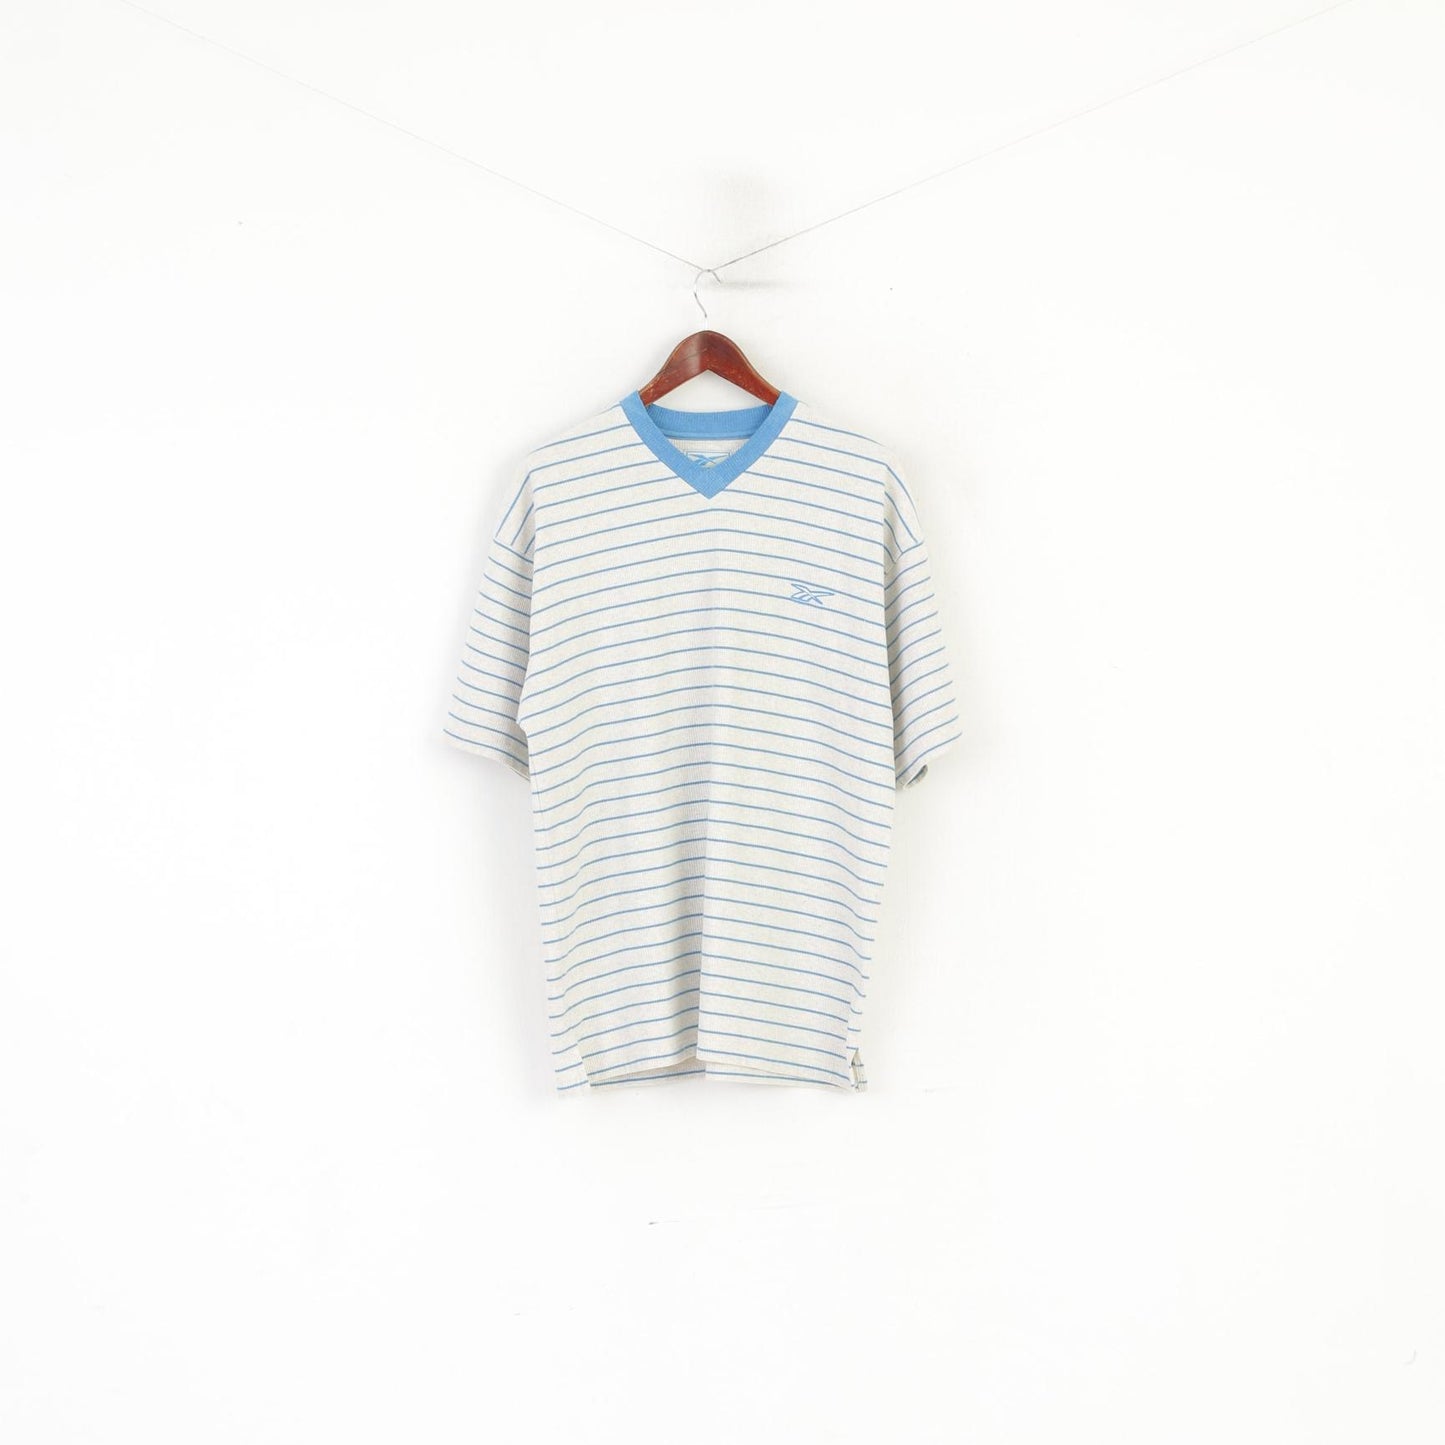 Reebok Men M Shirt Beige Blue Striped Vintage Cotton Oversize Oldschool Top